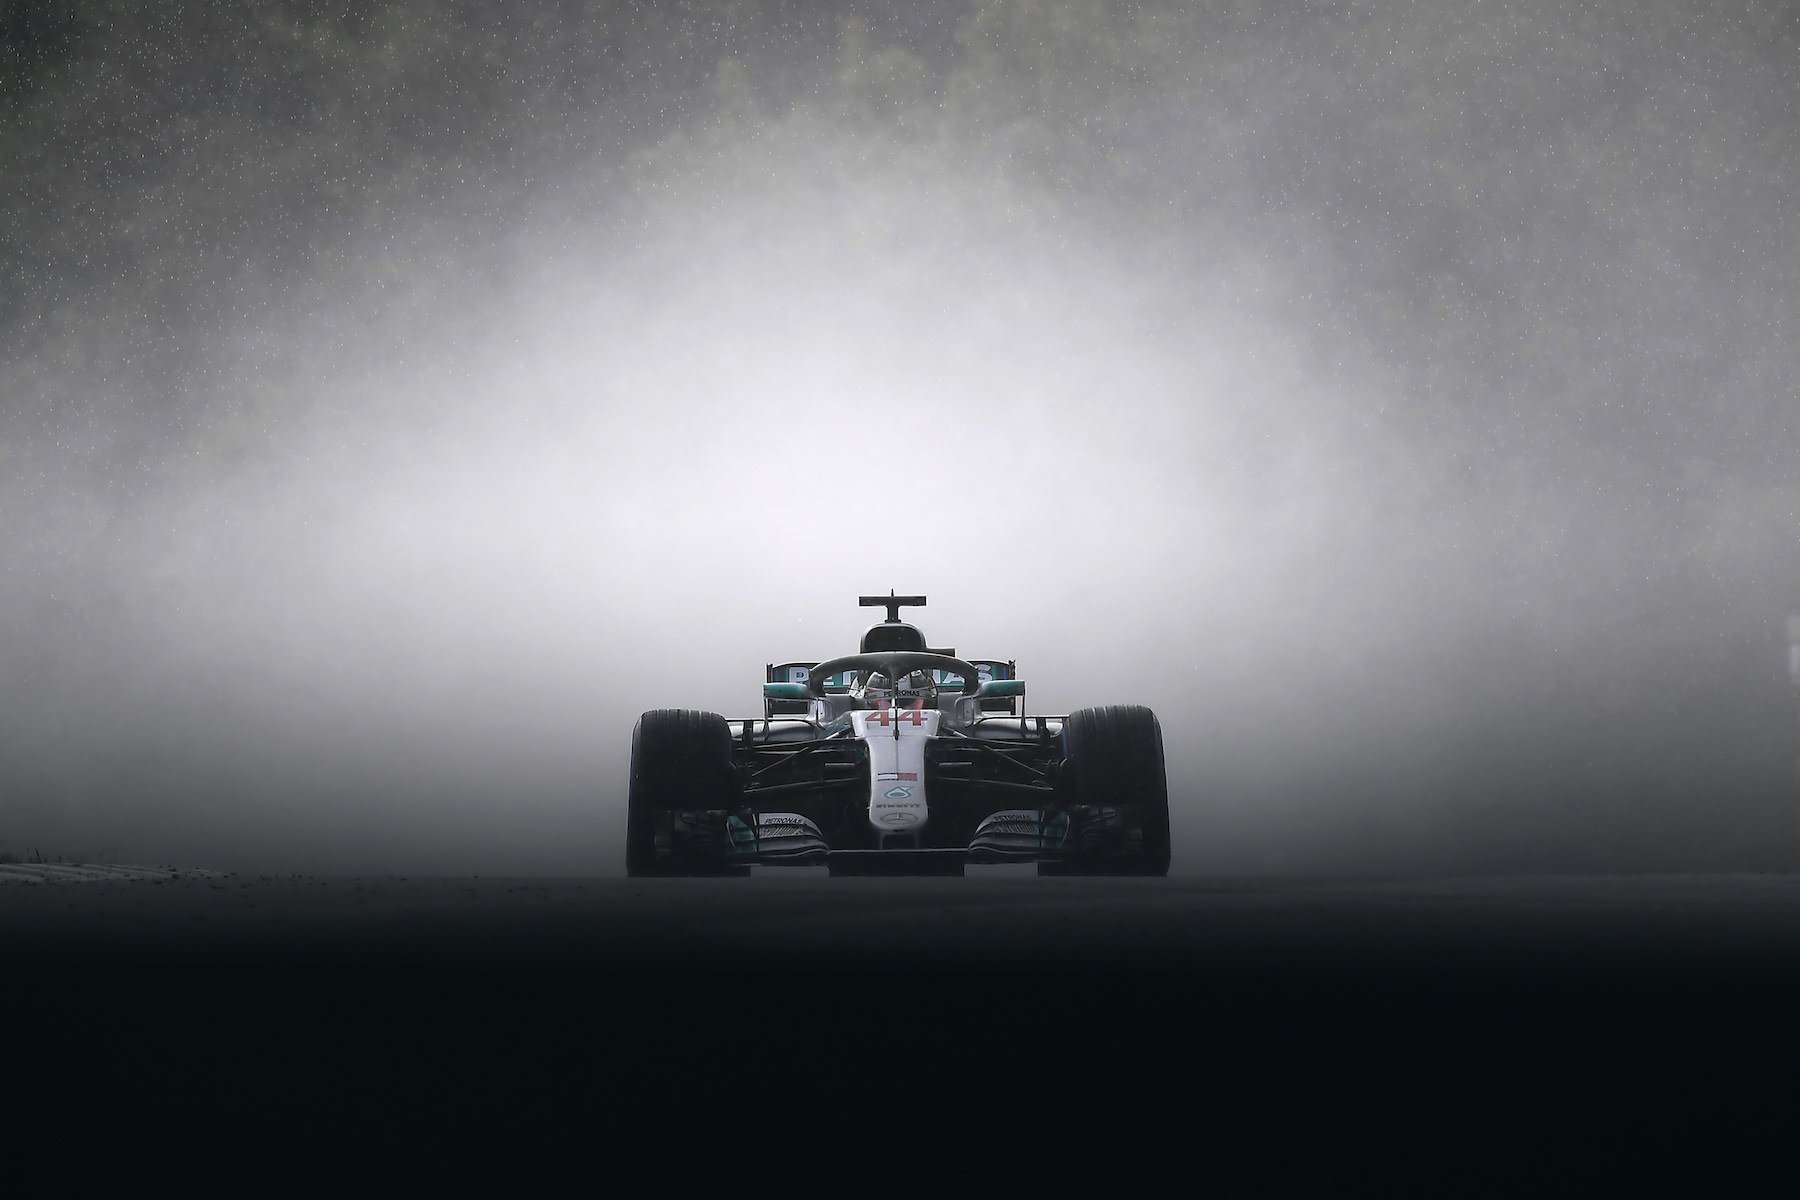 7 - Lewis Hamilton at Budapest